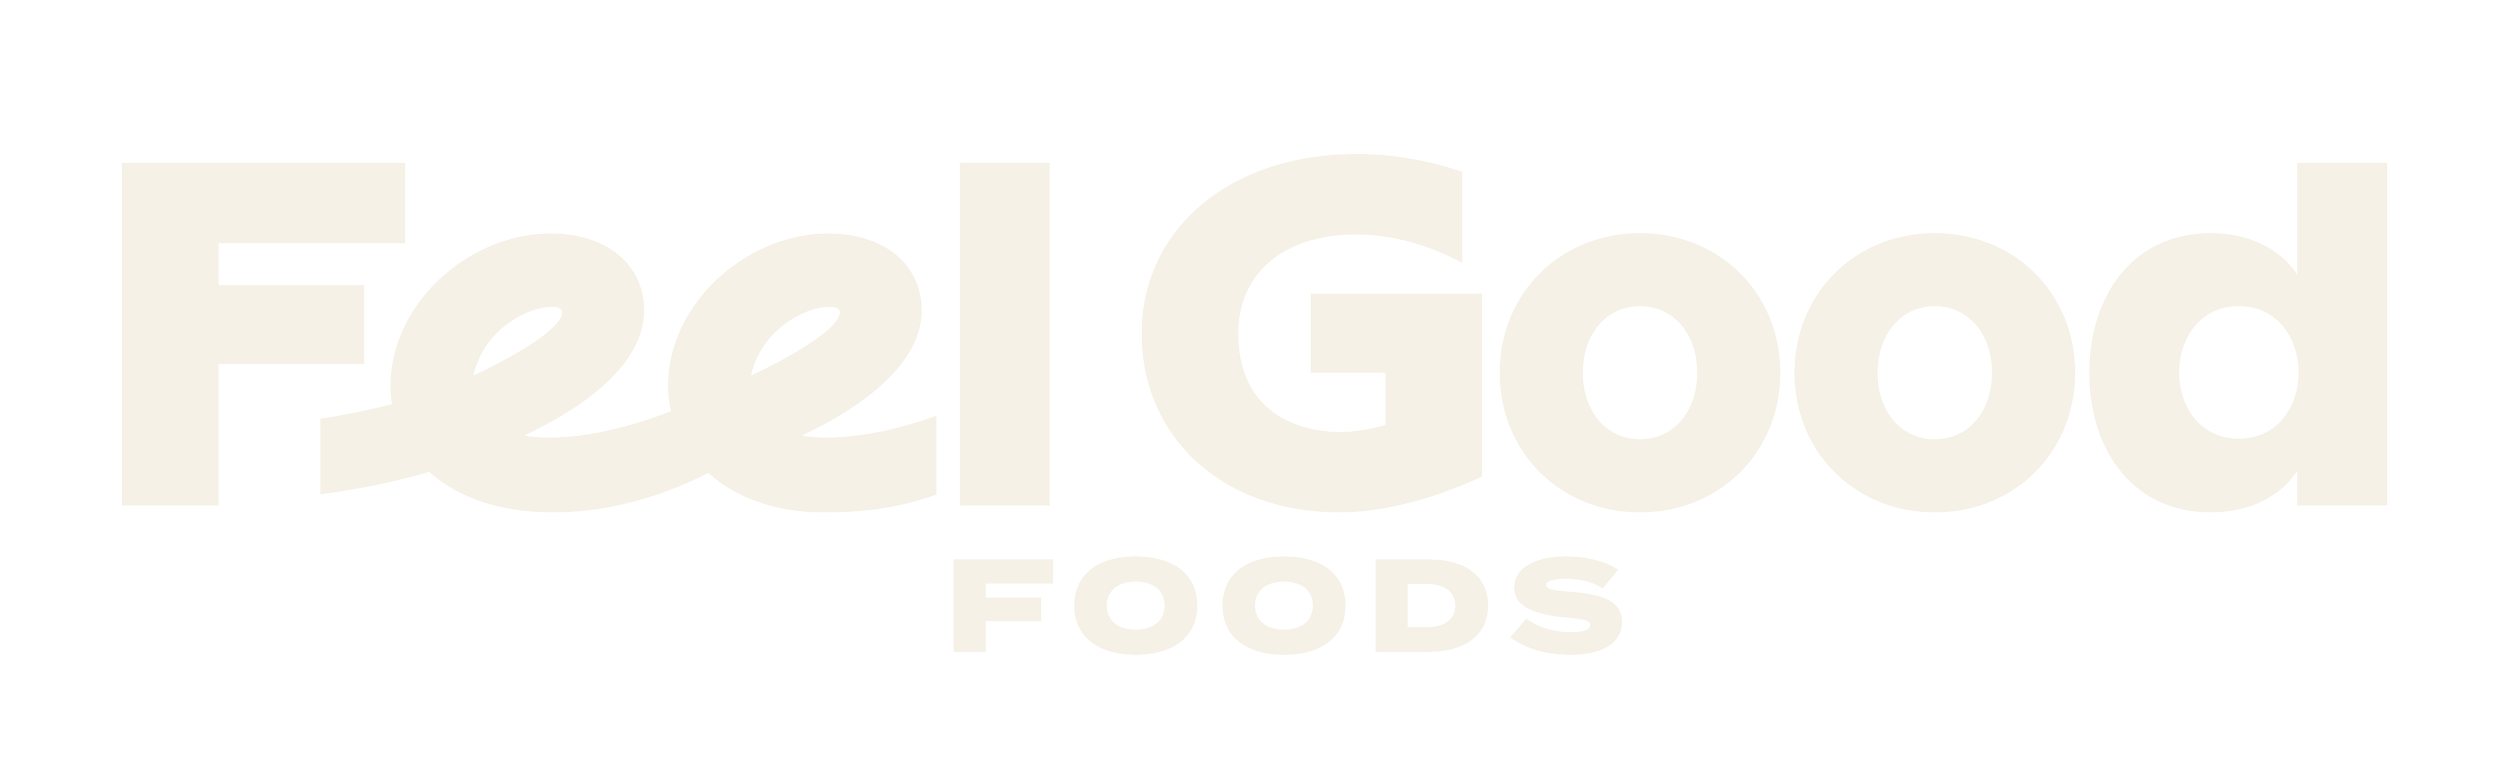 feel-good-logo.png